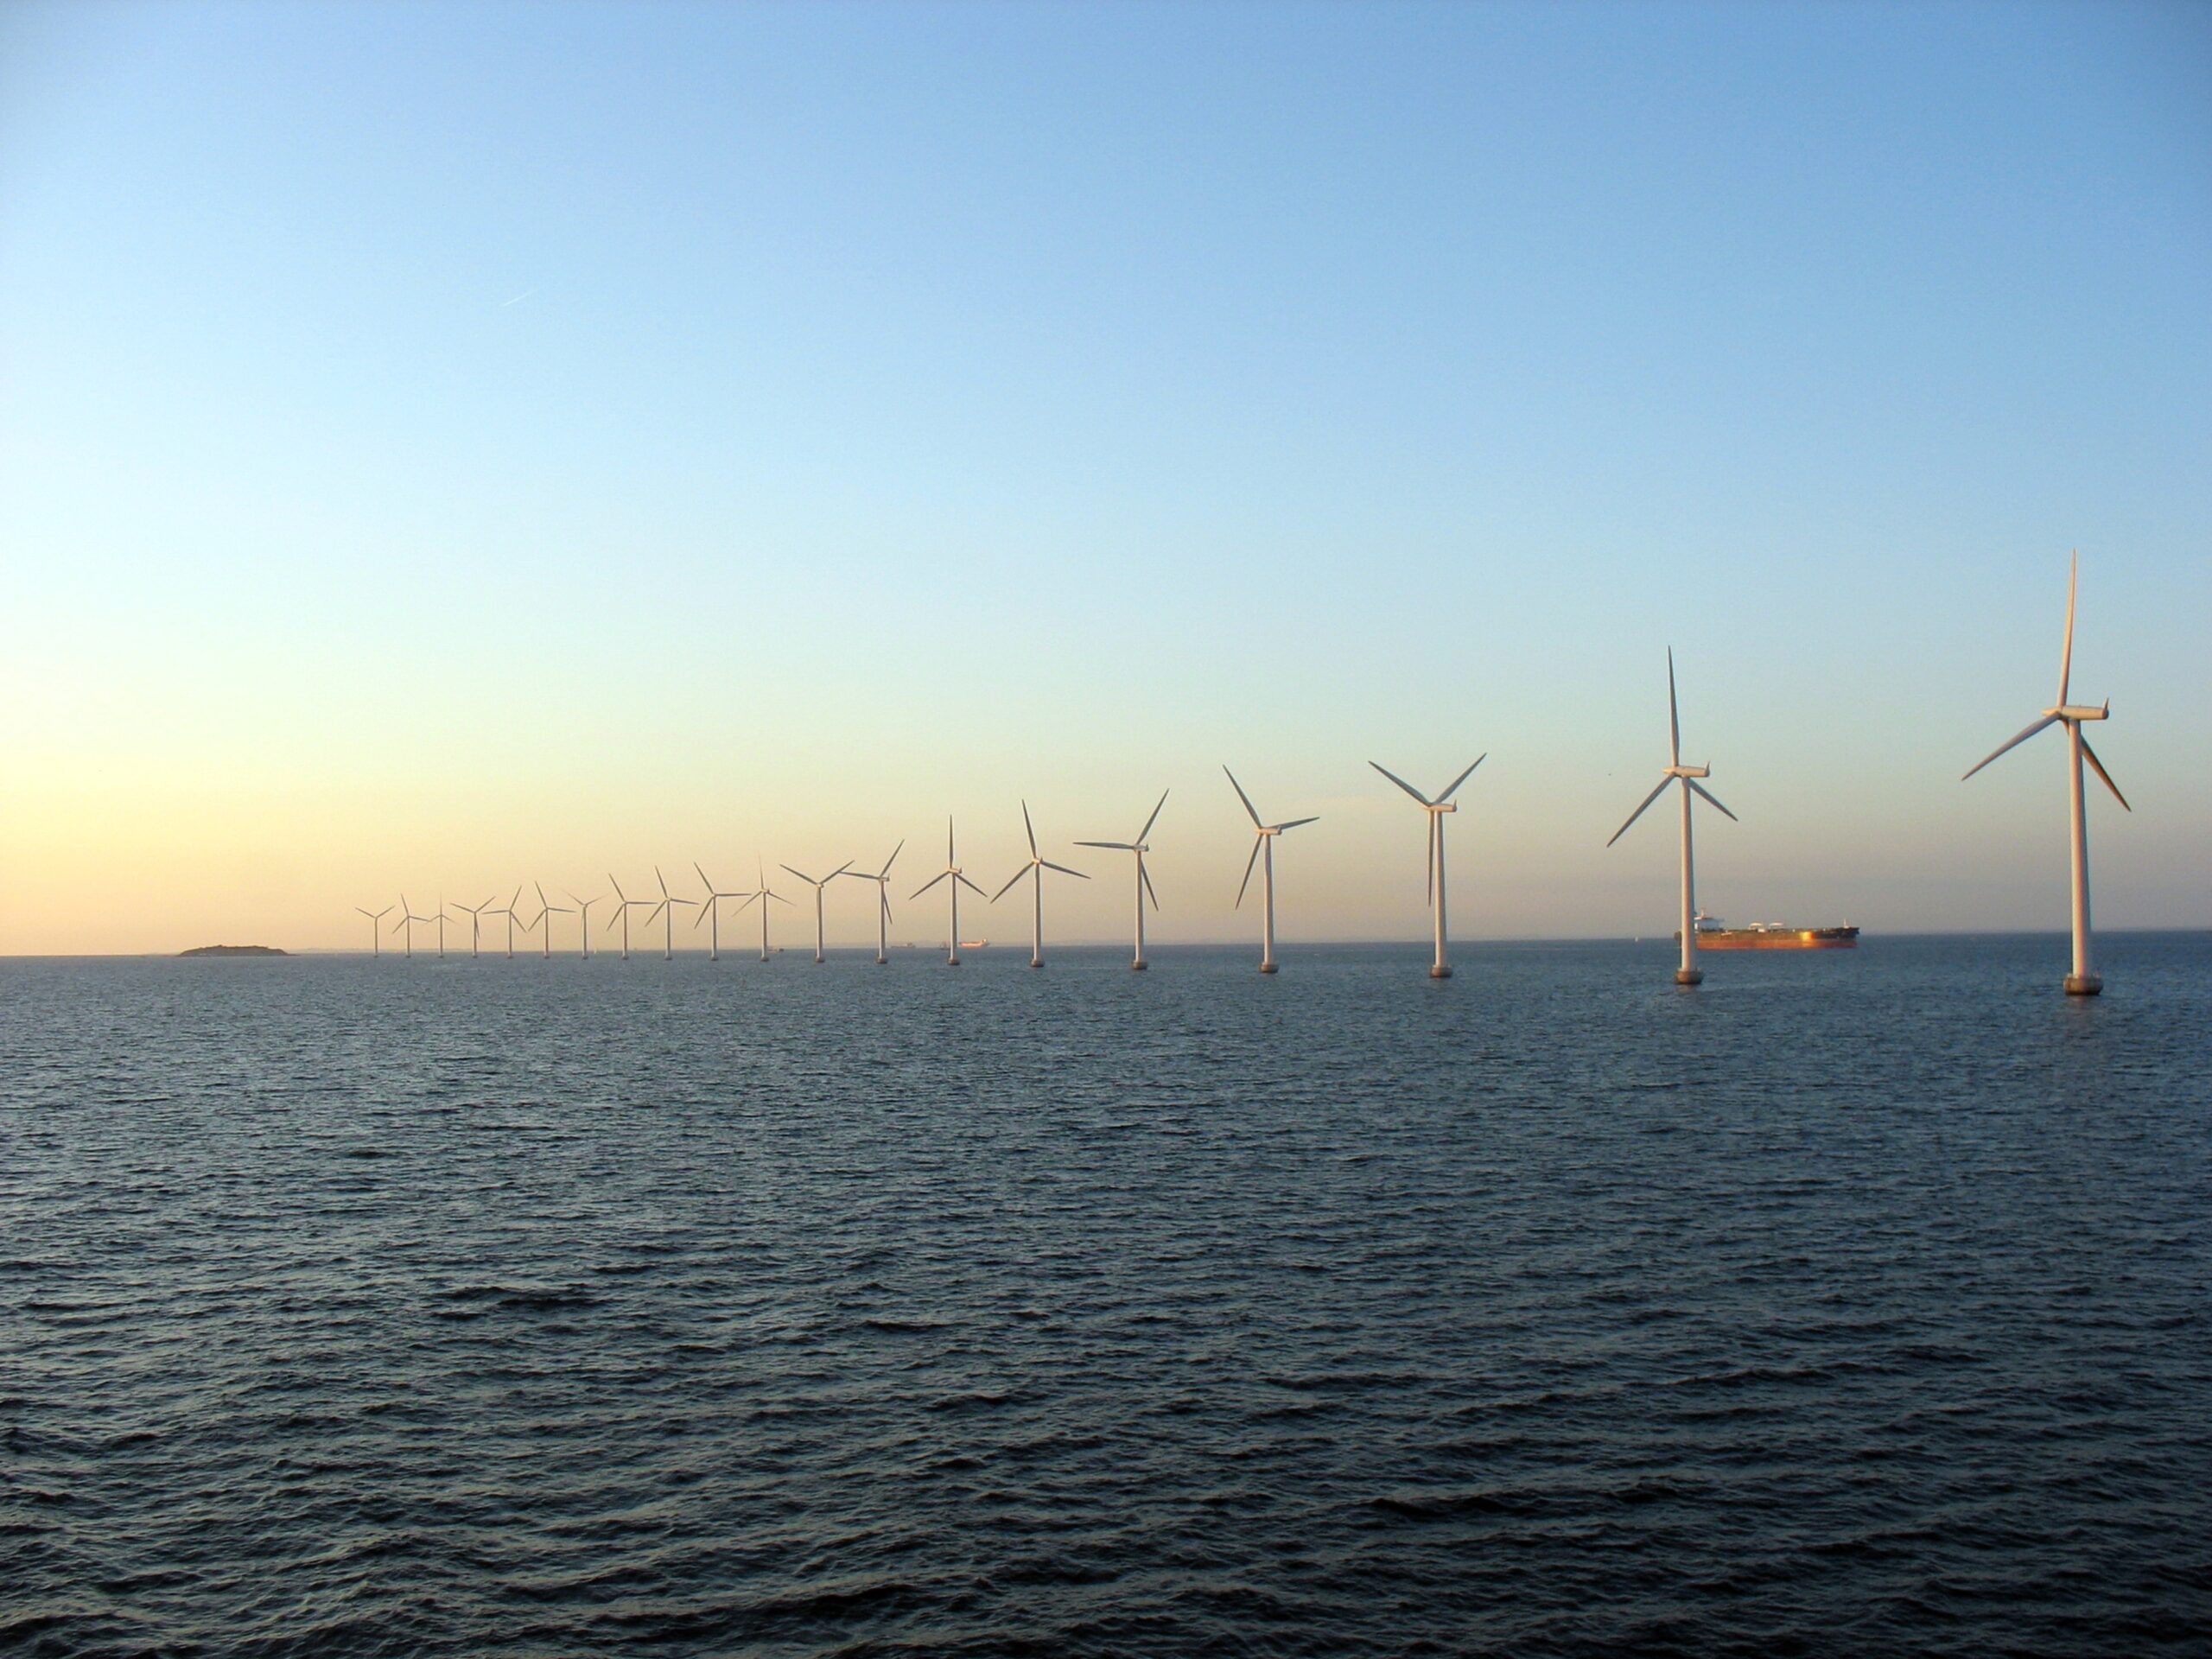 Offshore windfarm near Copenhagen in Denmark with a ship visible